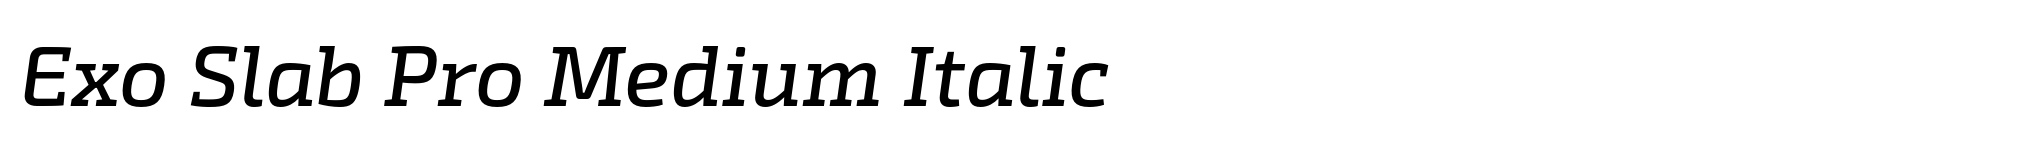 Exo Slab Pro Medium Italic image